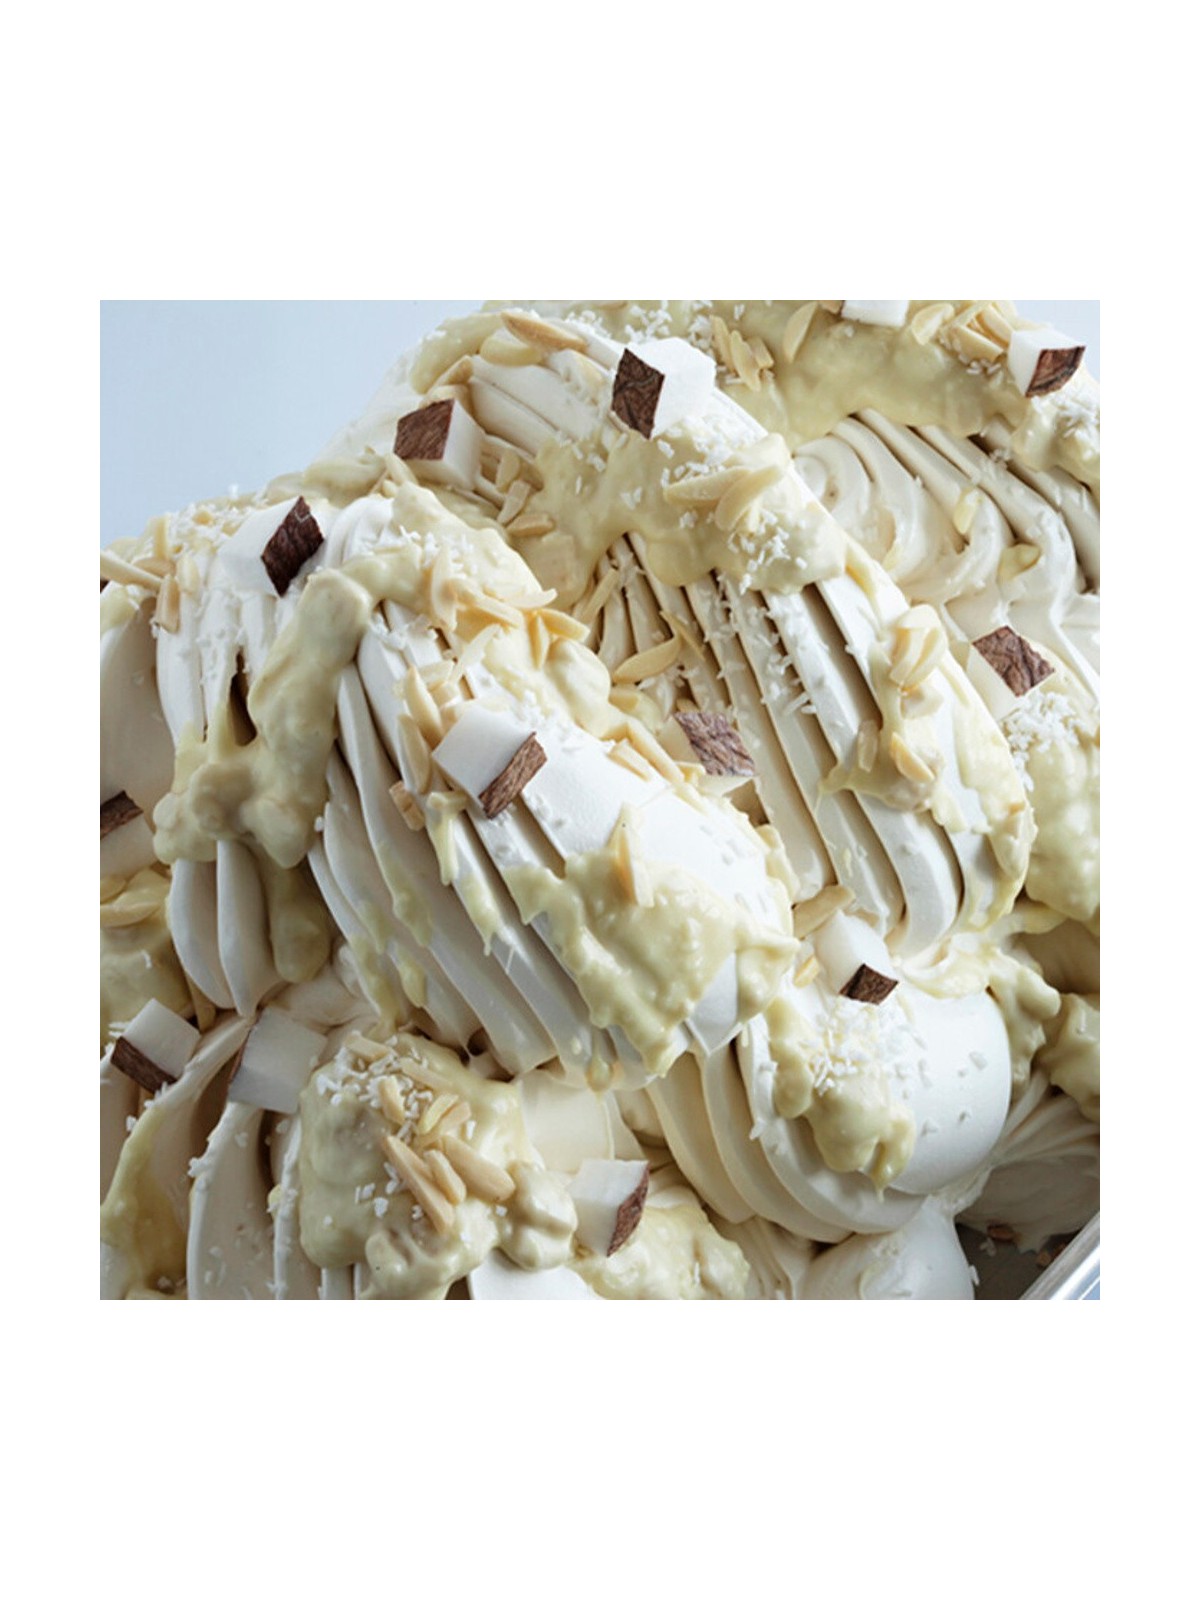 Joycream "Donatello" - weiße Schokolade mit Kokos 250 g